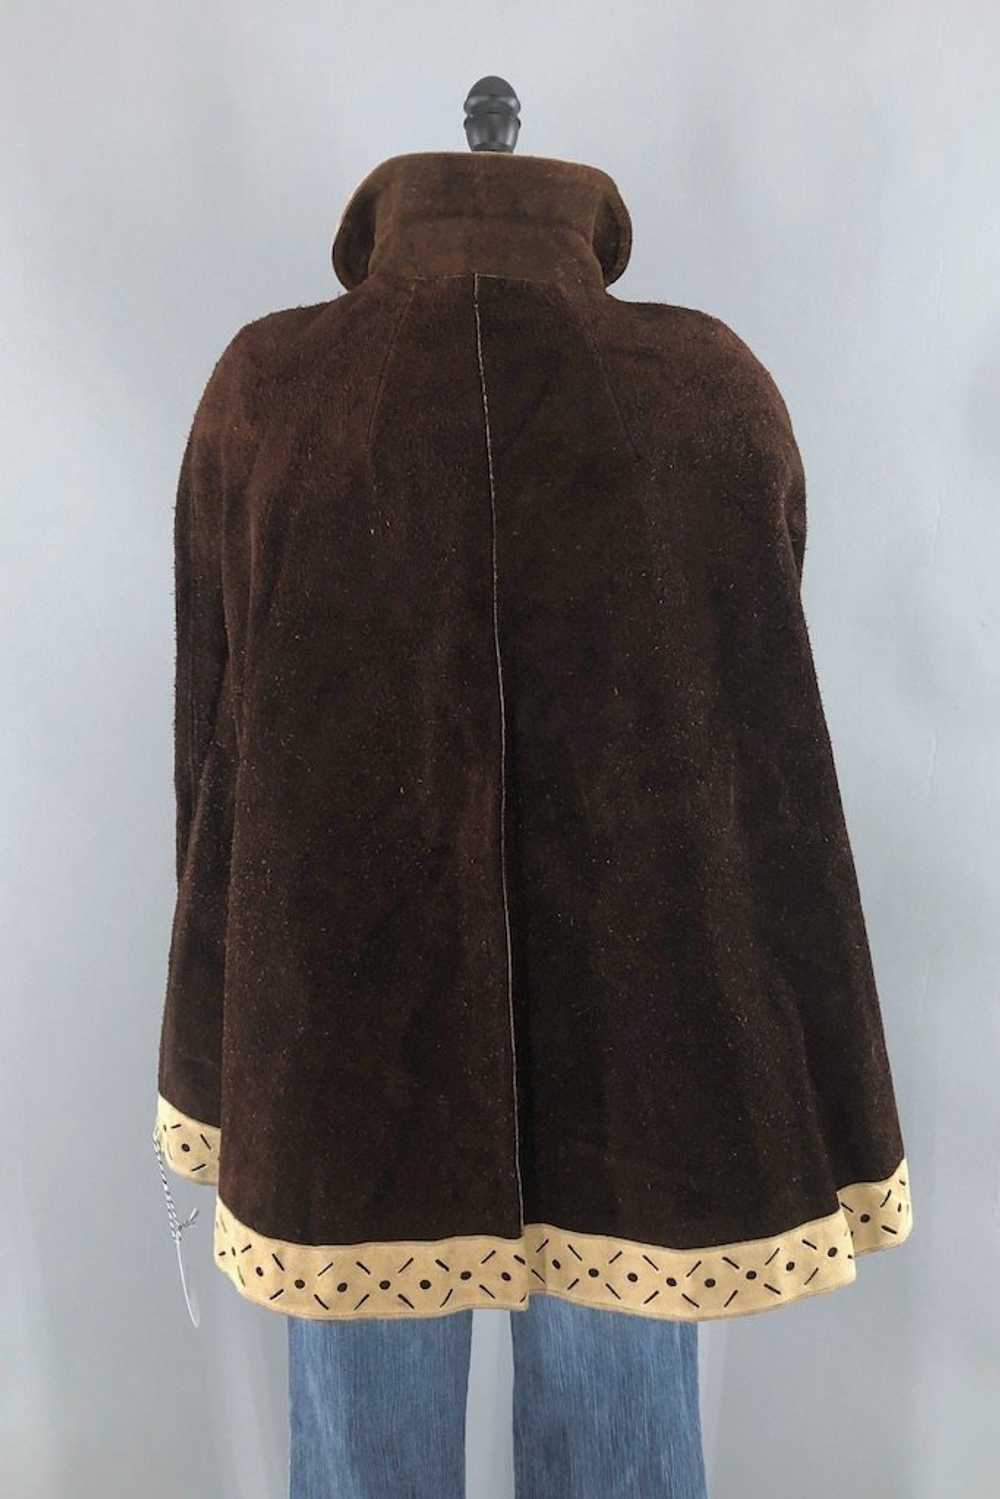 Vintage Suede Leather Cape Poncho Hippie Jacket - image 5